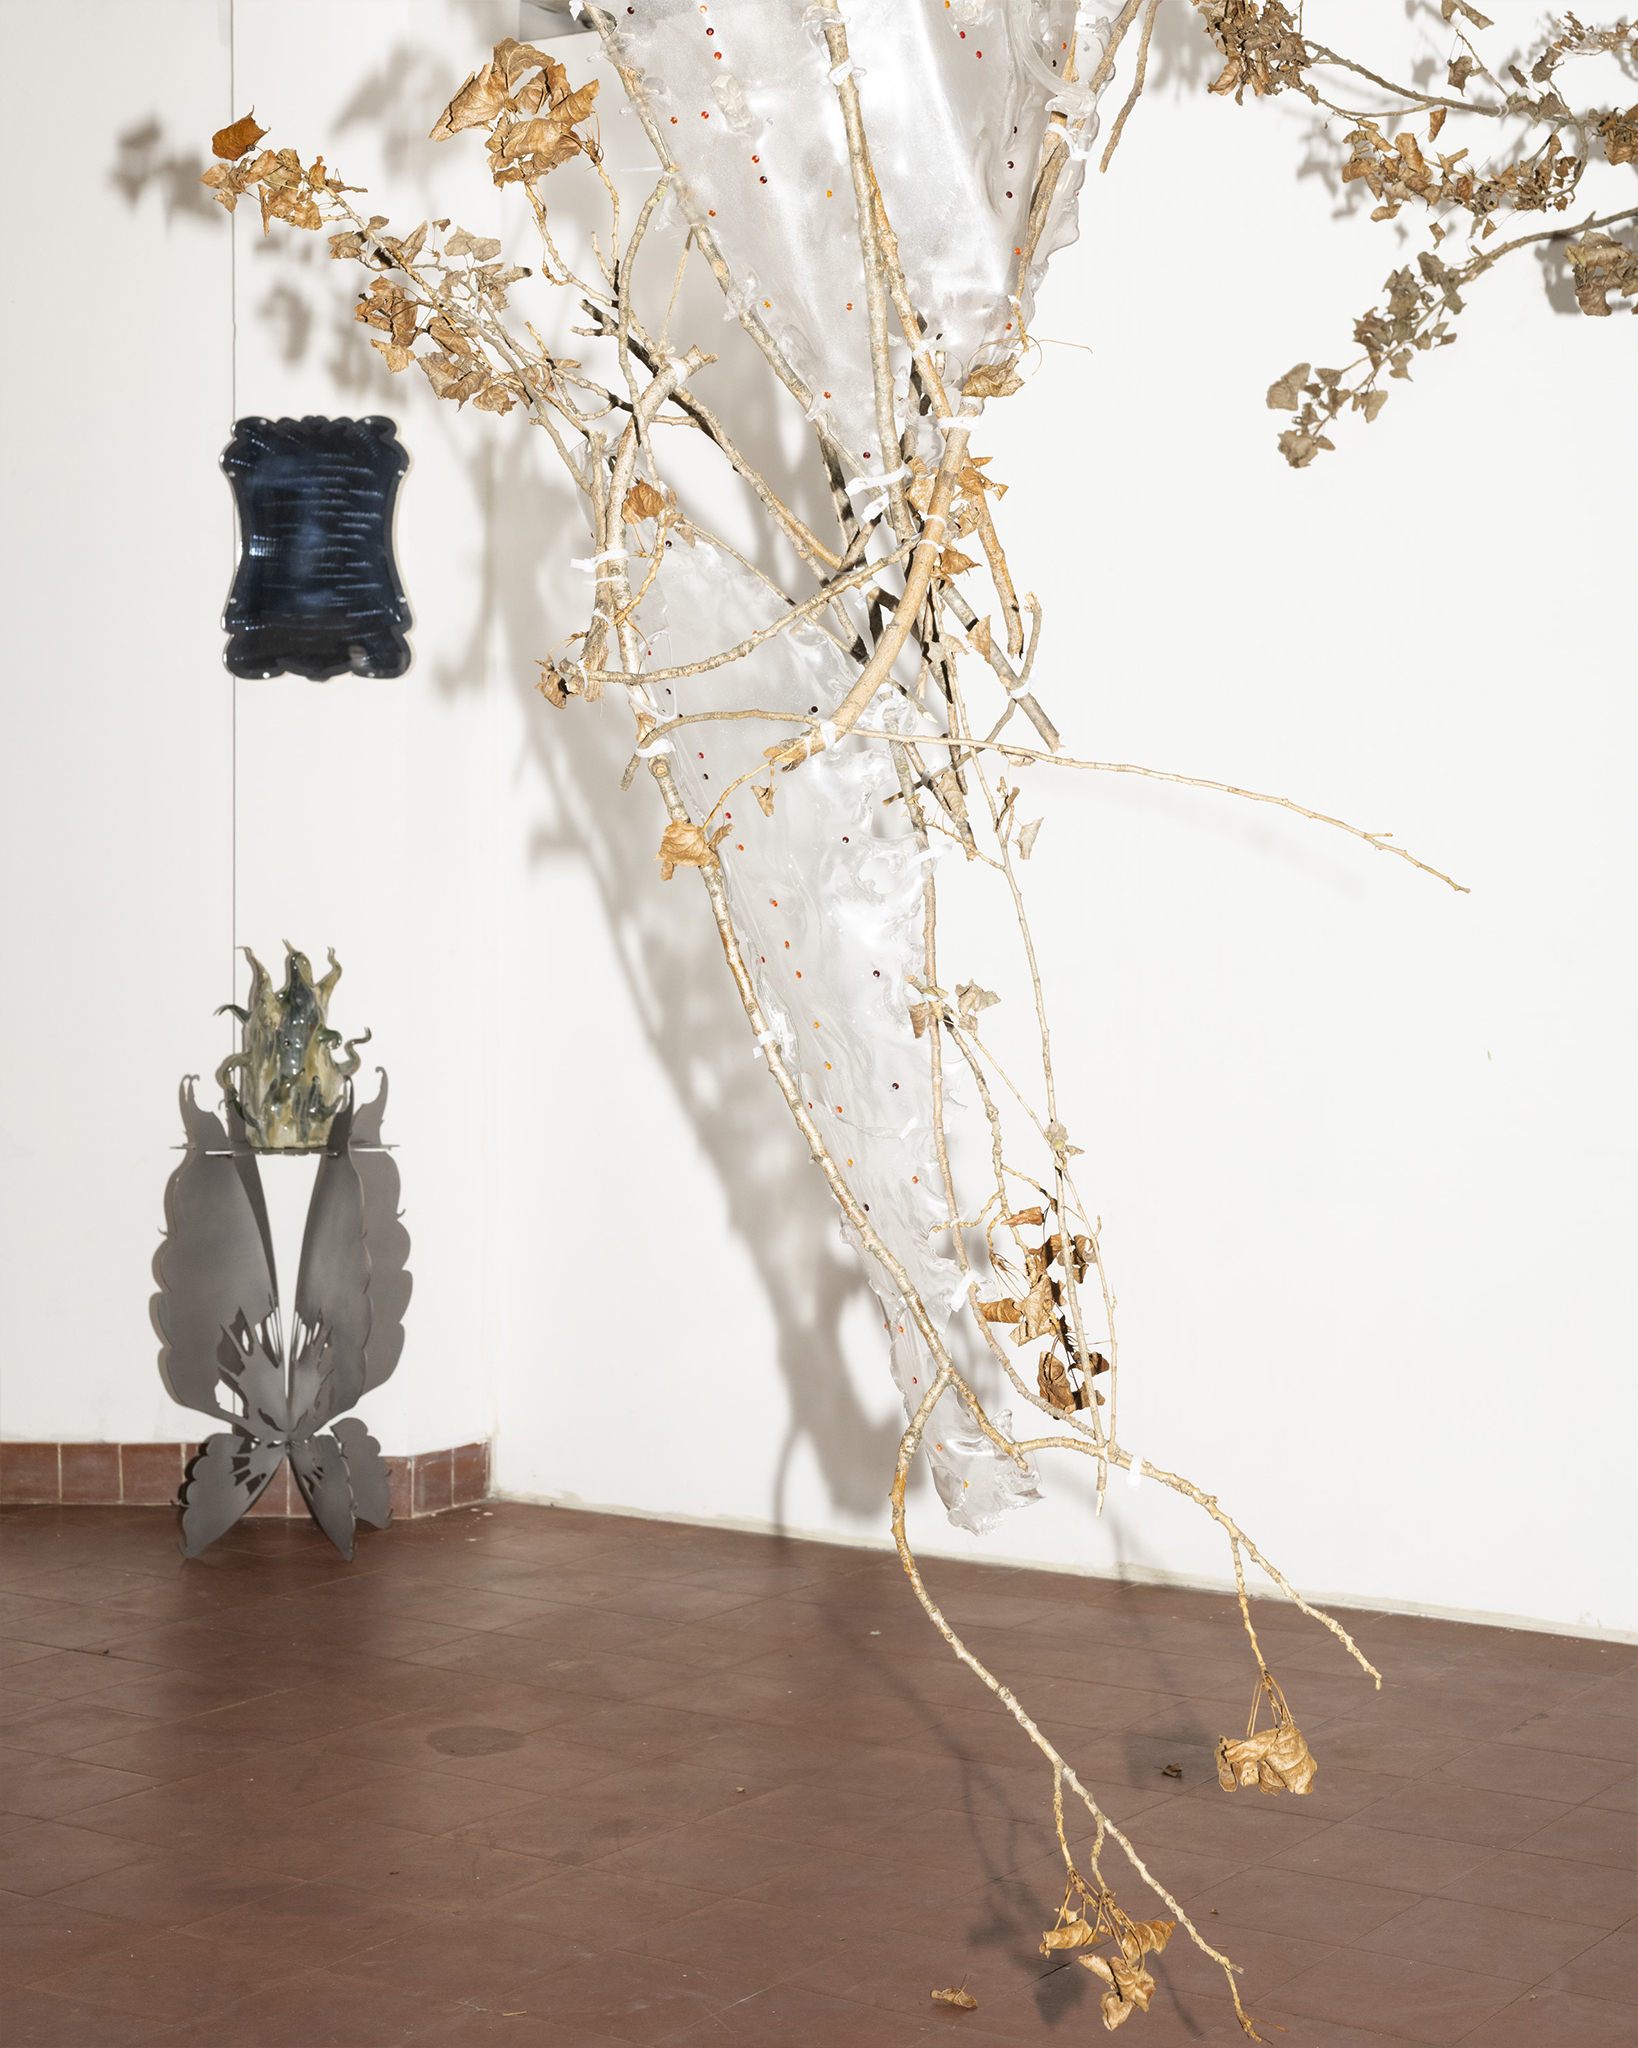 Installation piece by Tristan Bründler, table and mirror by Kyra Nijskens, vase by Natalija Gucheva